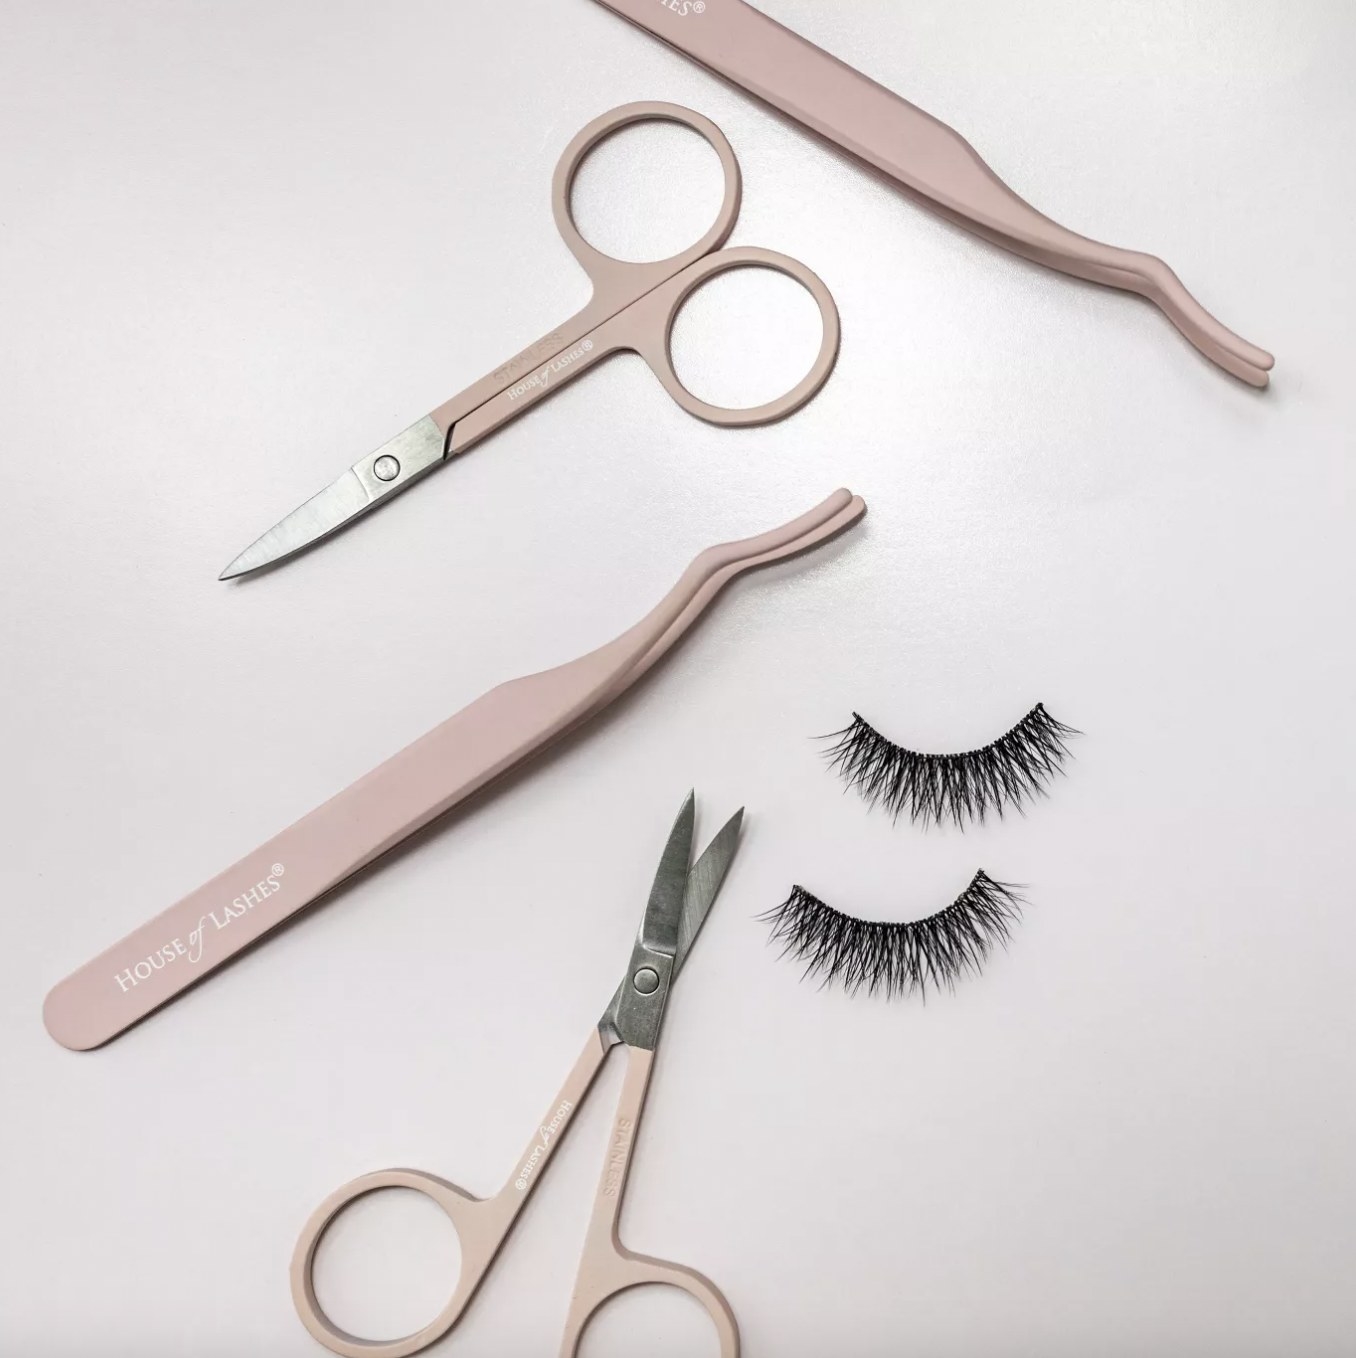 A pair of eyelash tools, scissors, and false eyelash strips